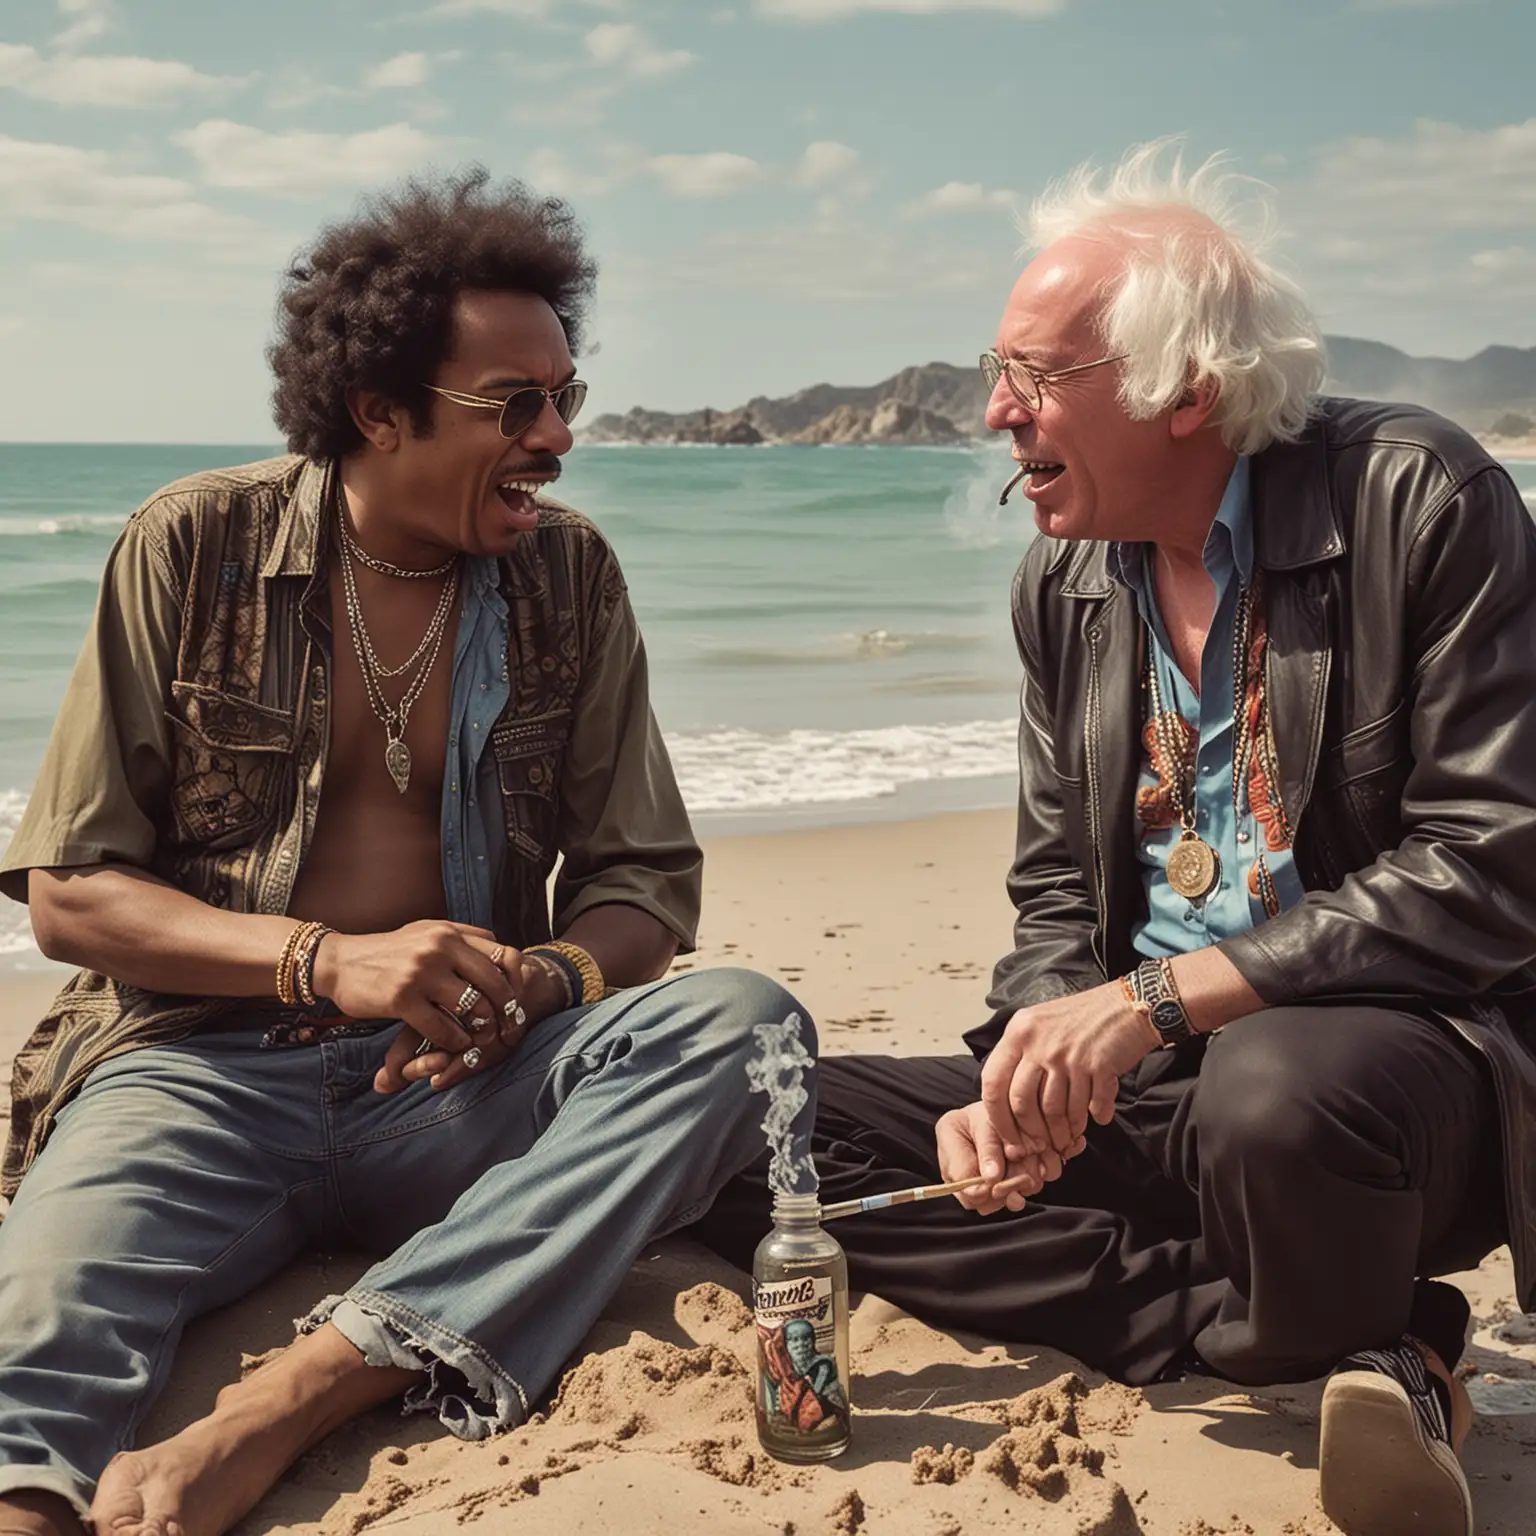 Bernie Sanders and Jimi Hendrix Sharing a Laugh on the Beach